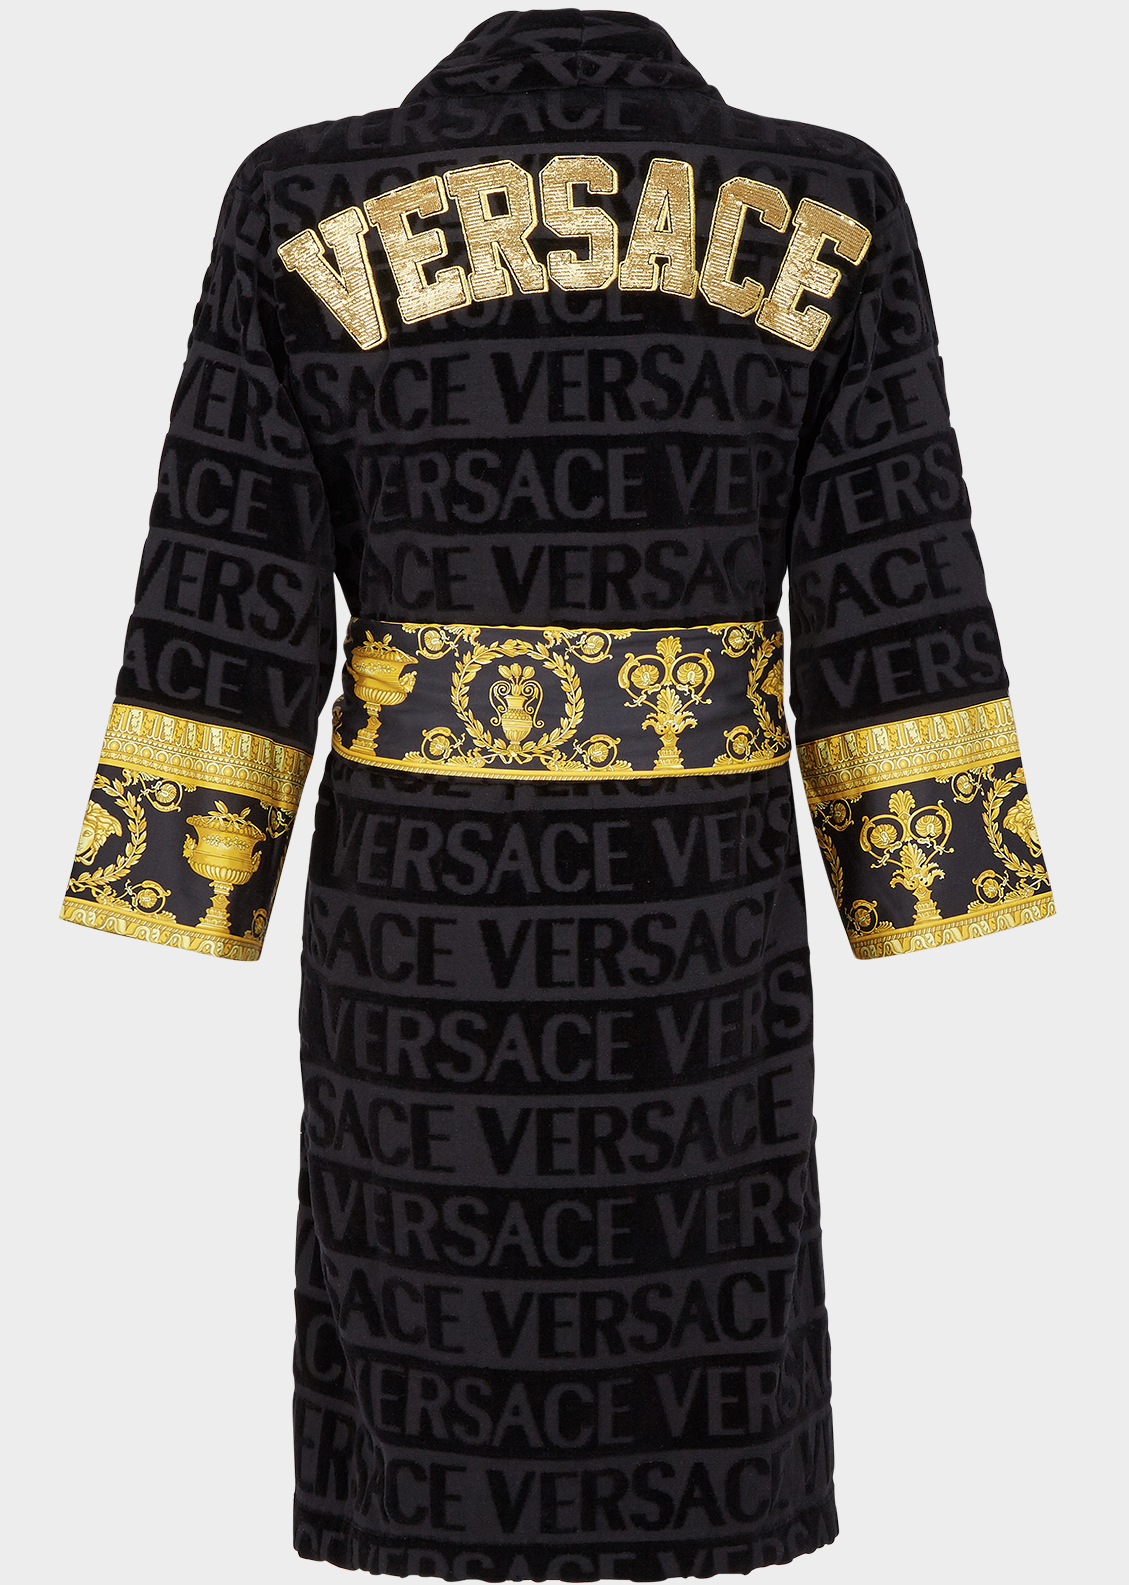 versace robe mens cheap